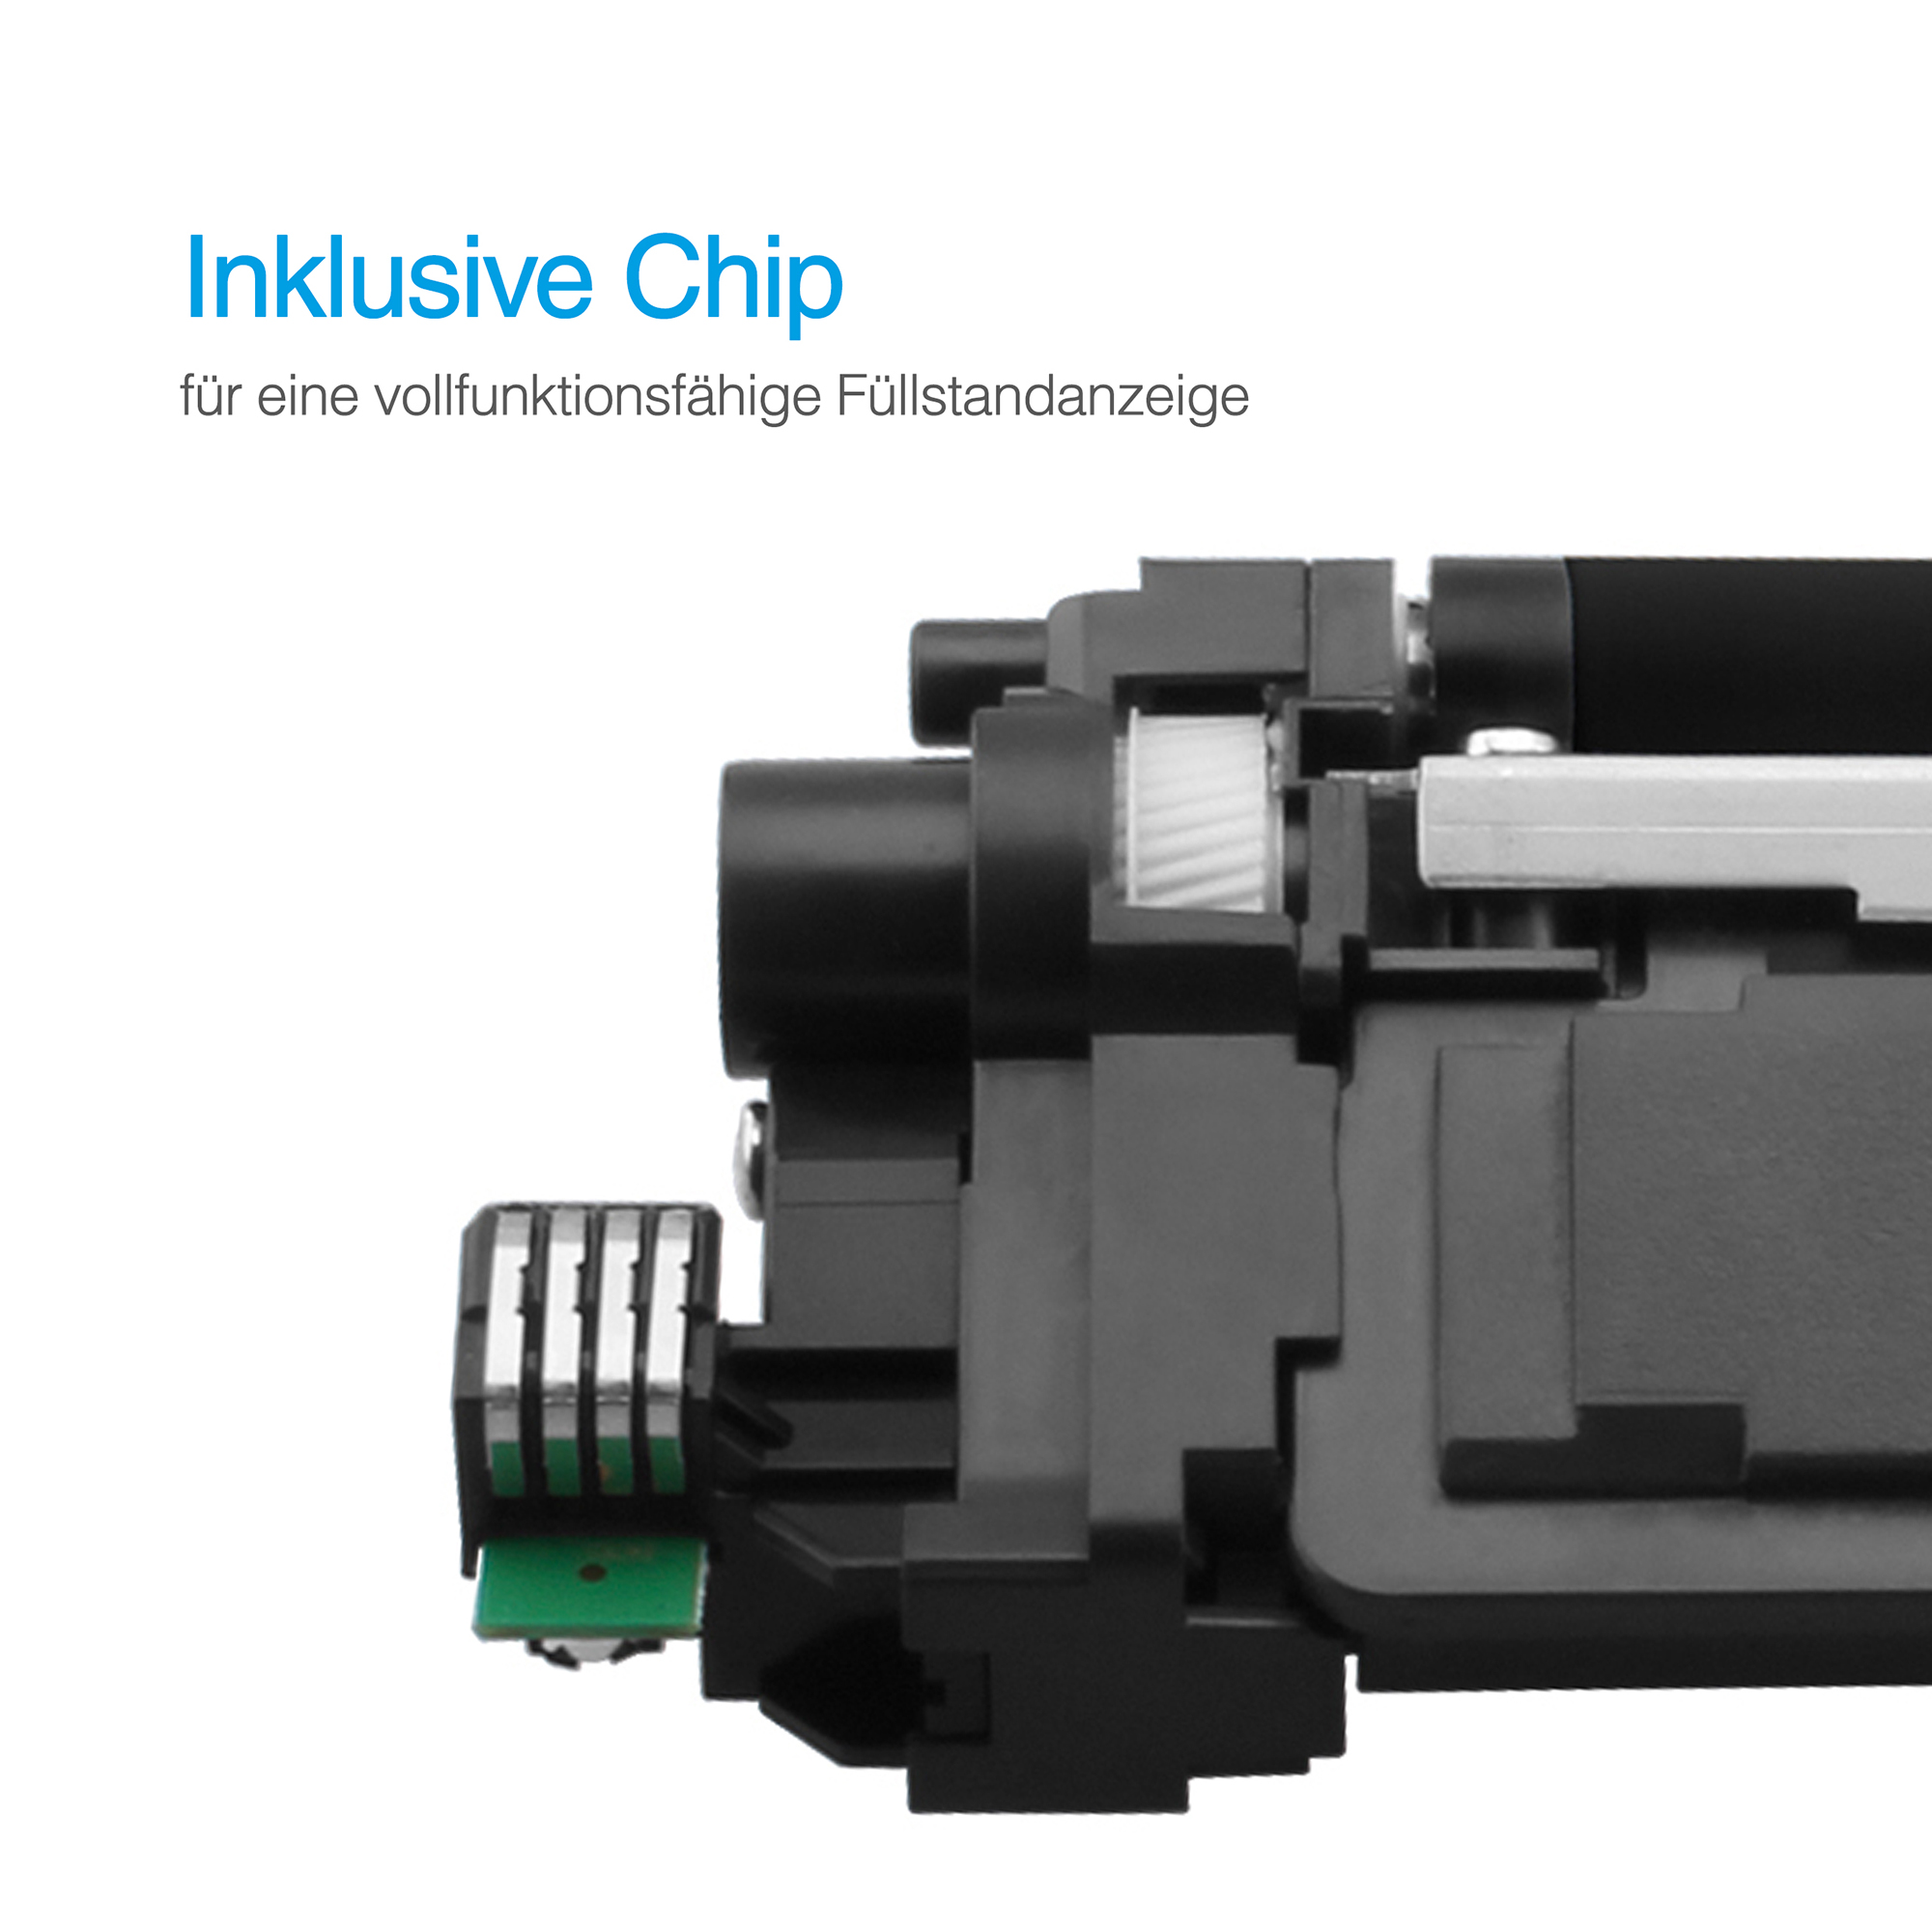 (CRG054H) TITO-EXPRESS black CRG-054H PLATINUMSERIE Canon ersetzt 1 Toner Toner